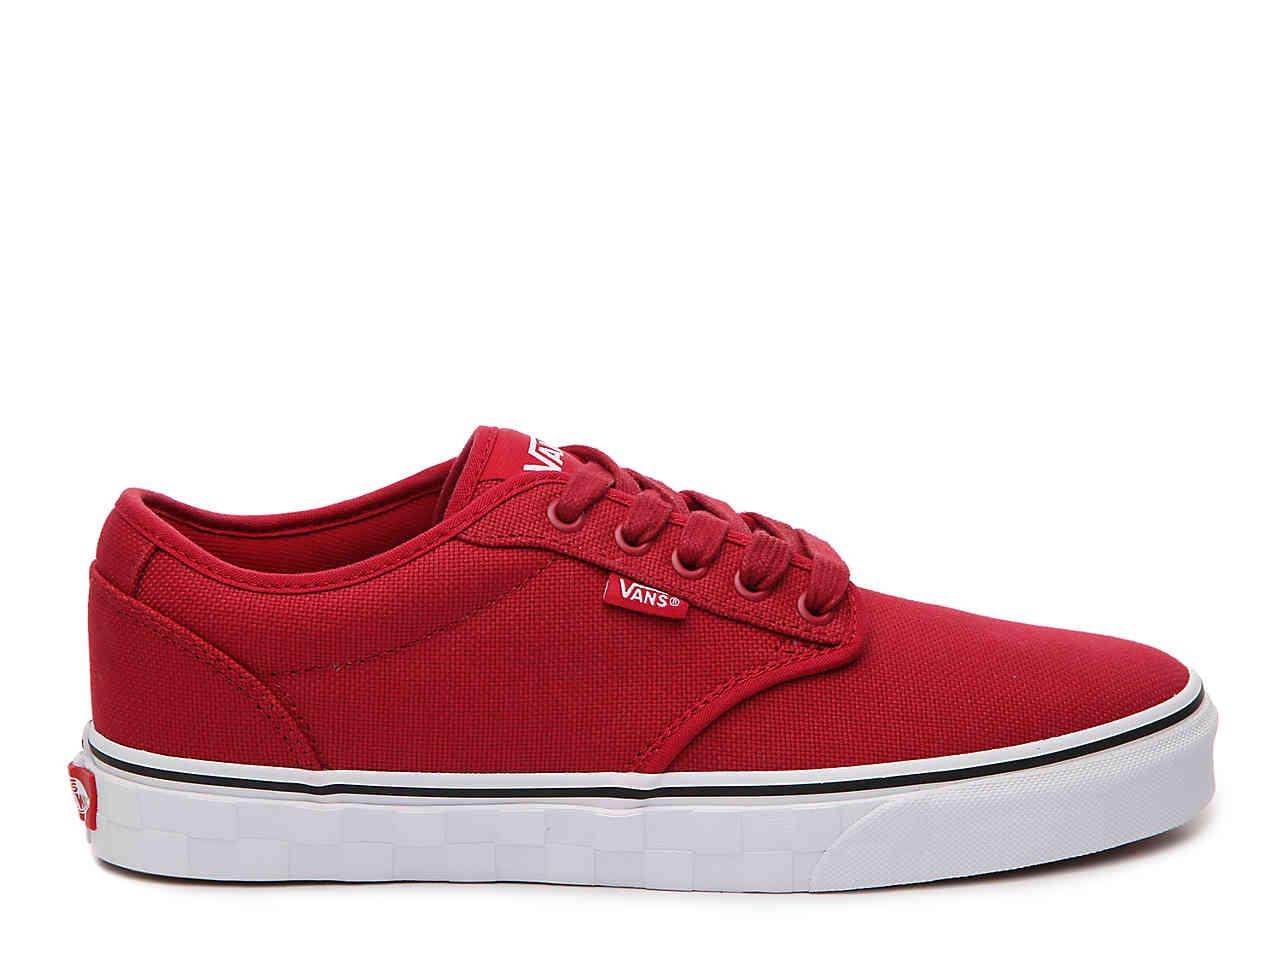 Vans Canvas Atwood Deluxe Sneaker in Red for Men - Lyst